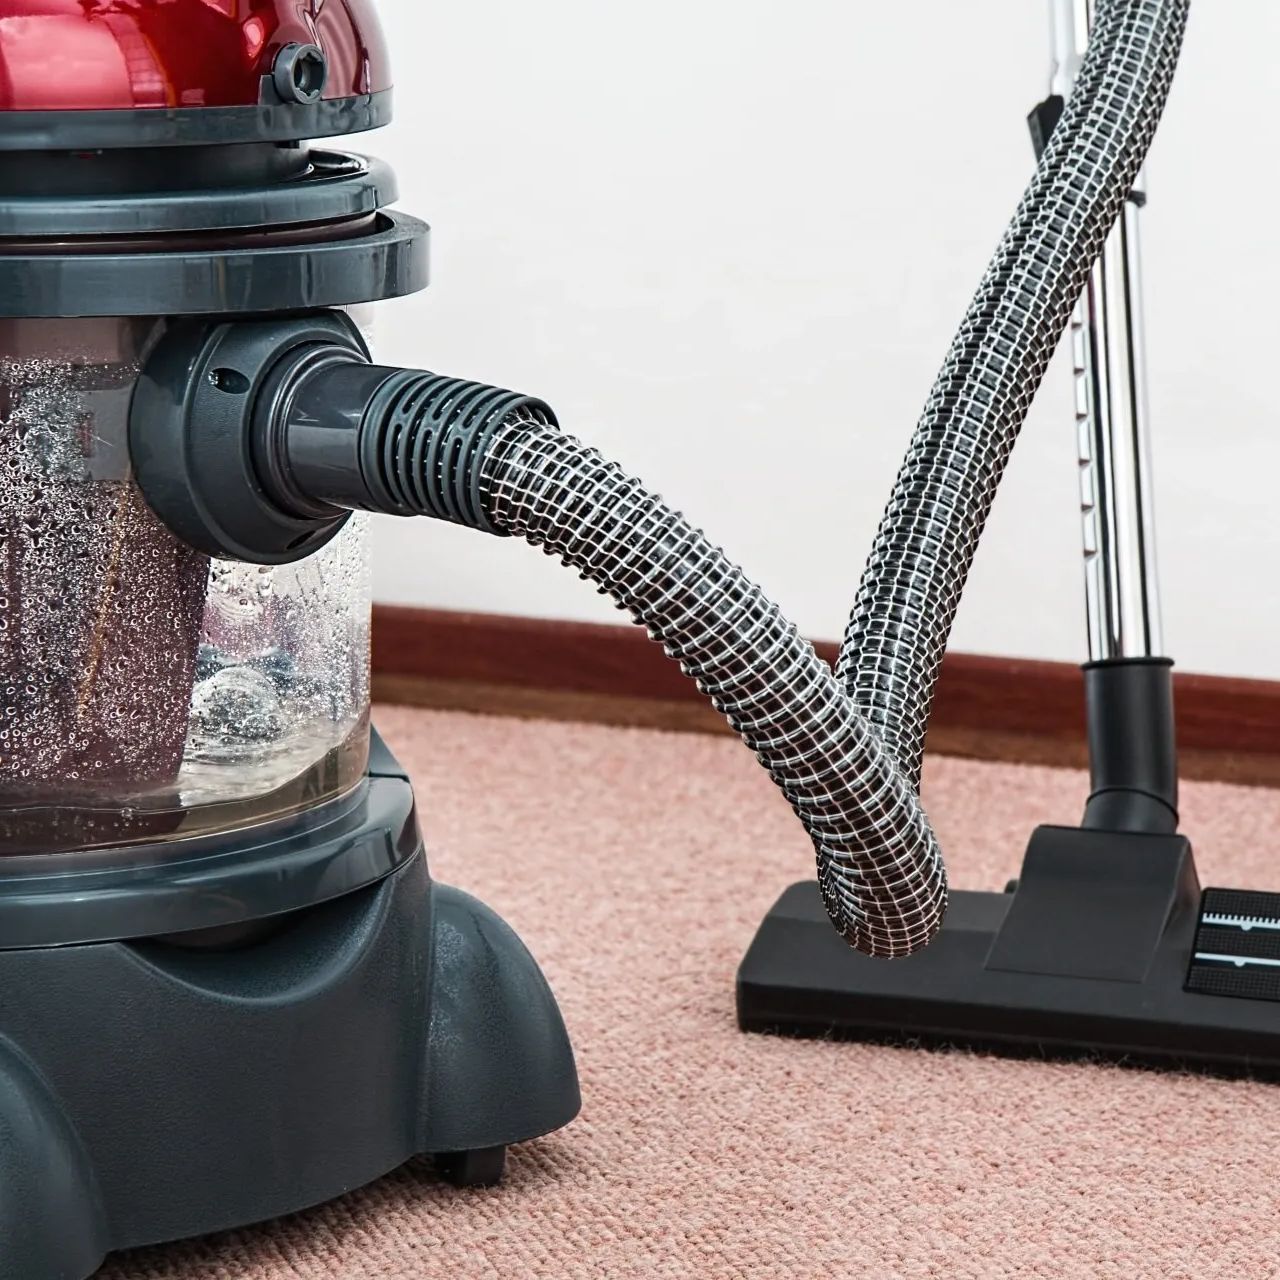 heavy-duty water vacuum